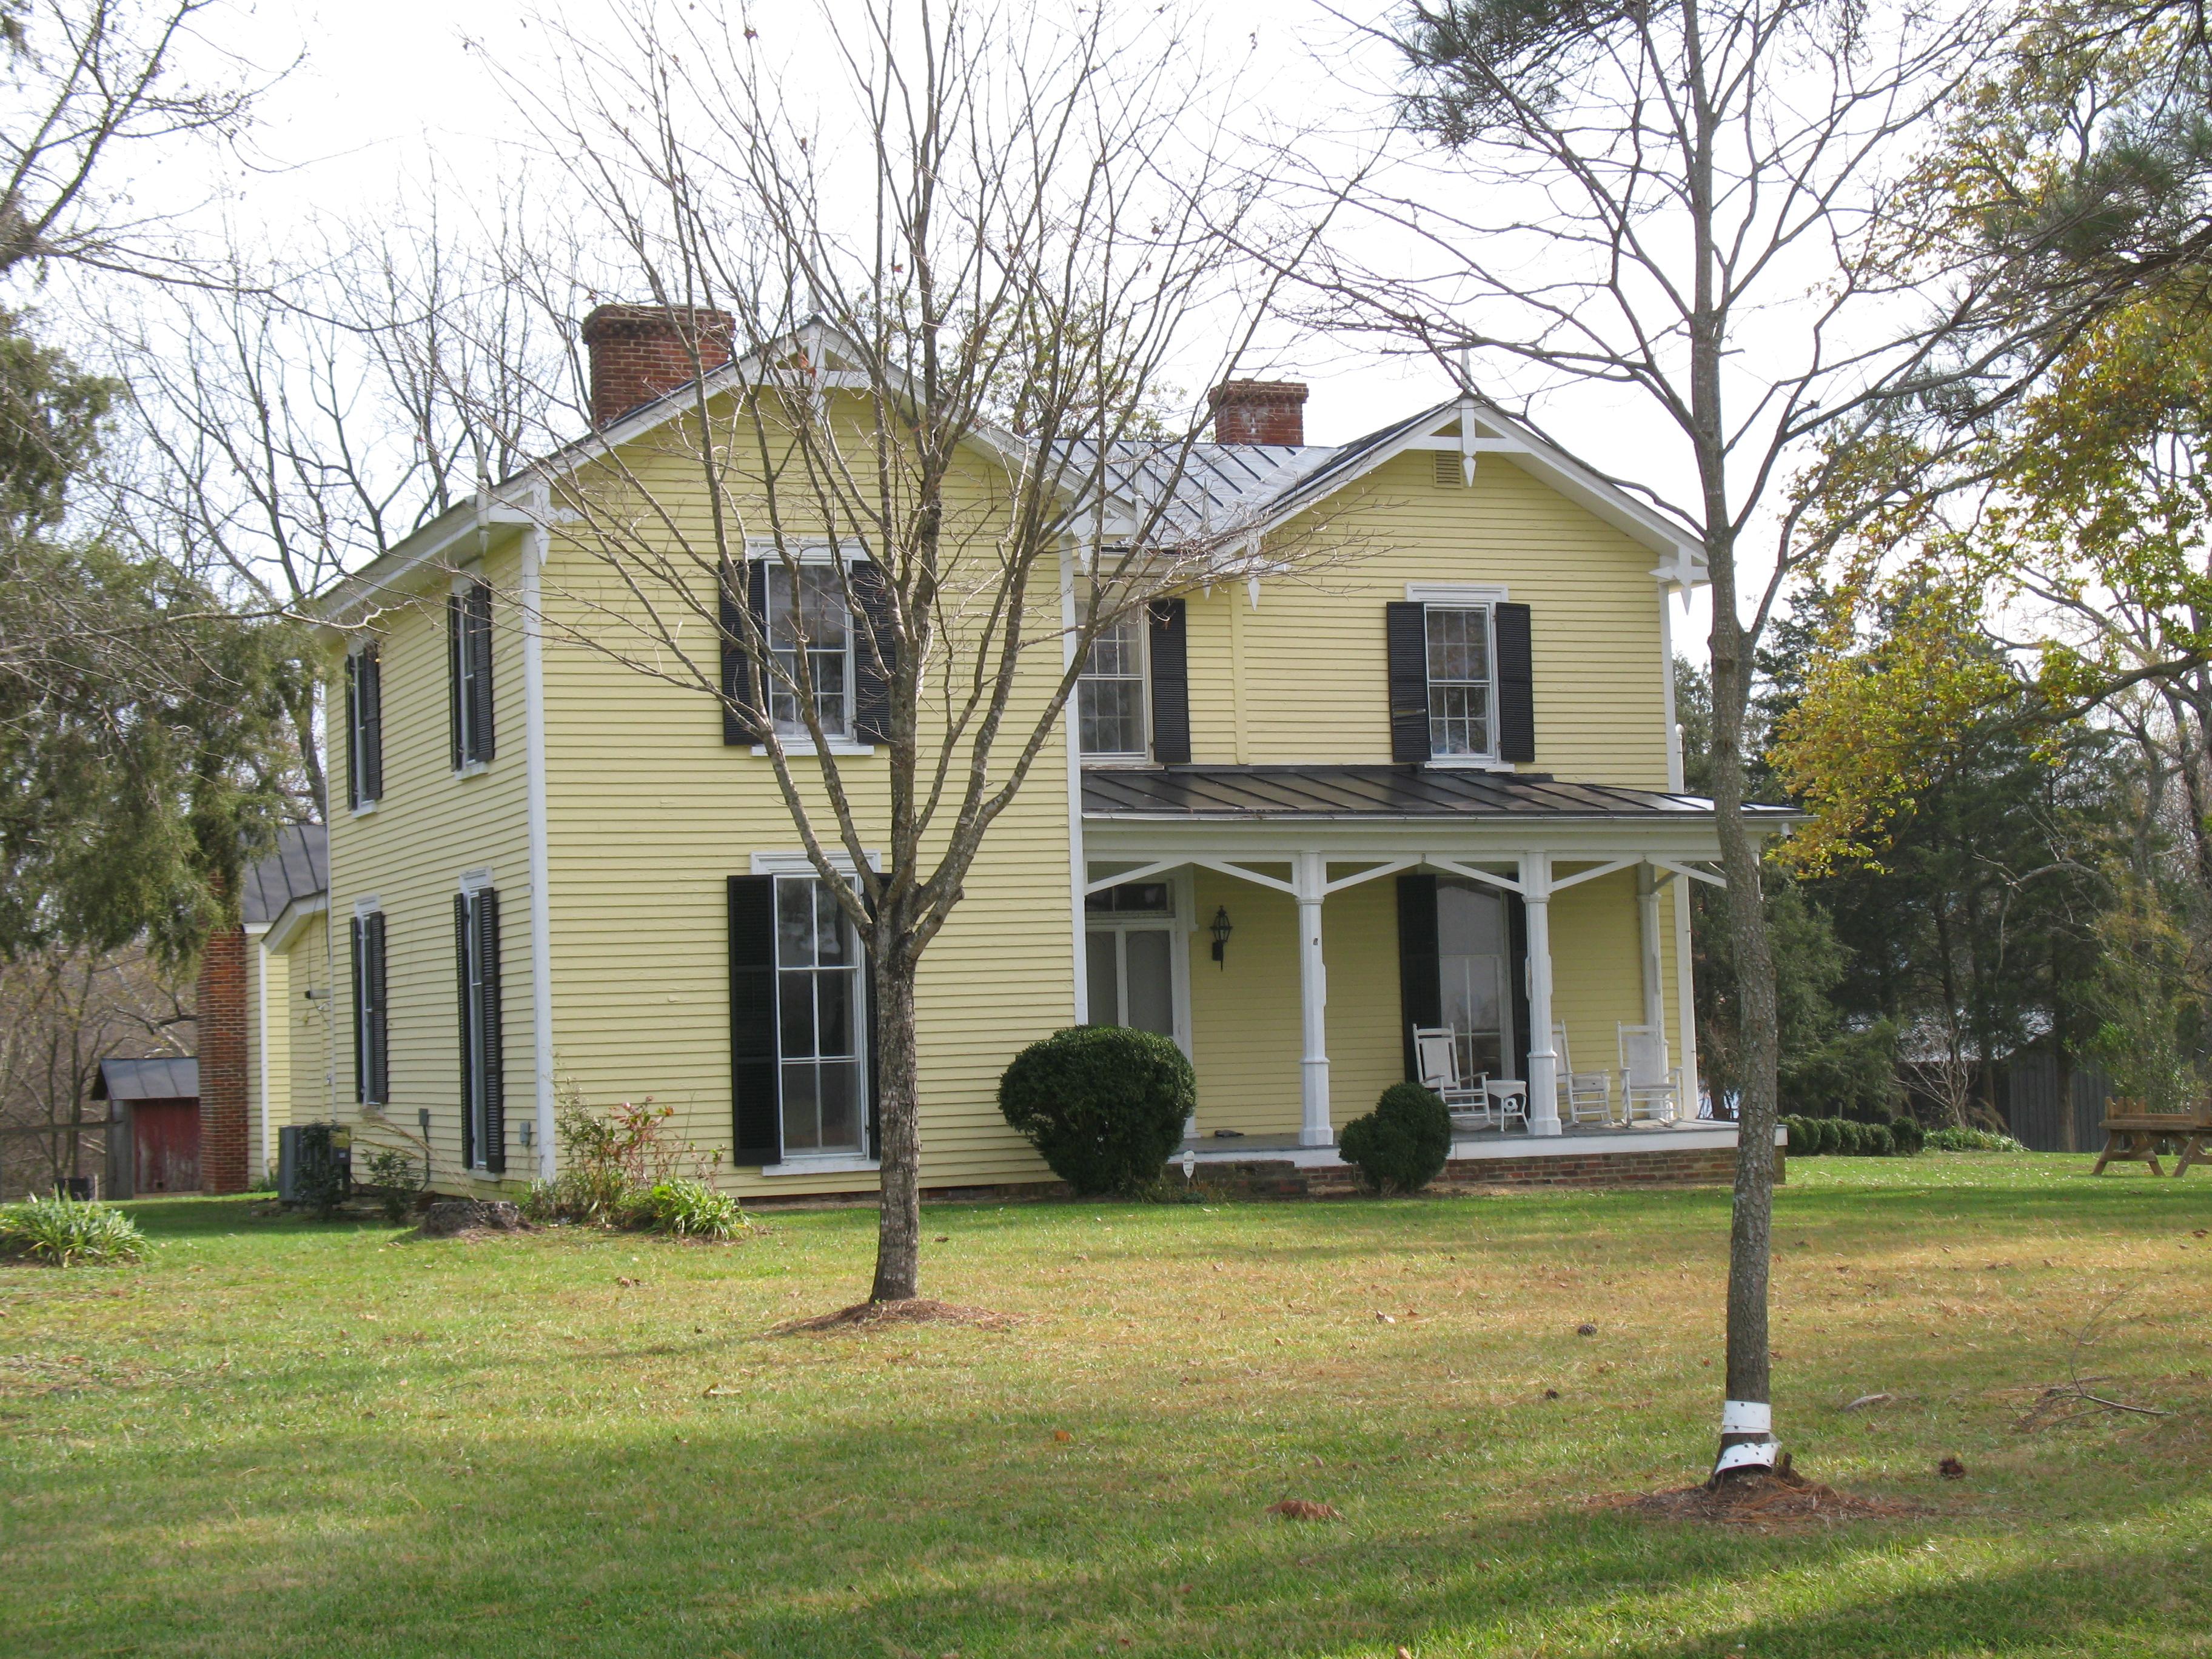 Yellow historic house